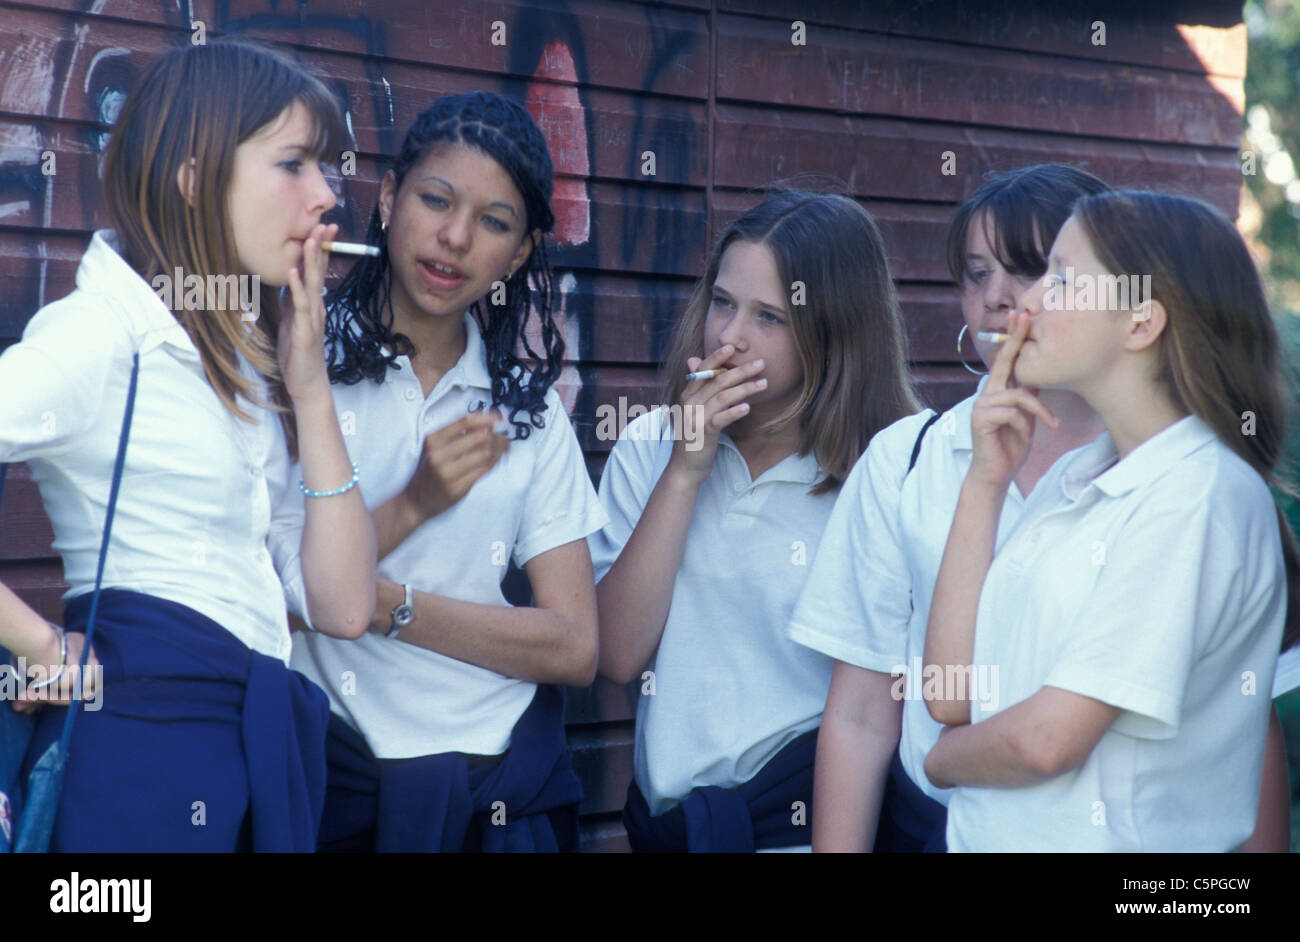 Behind Middle School Girls